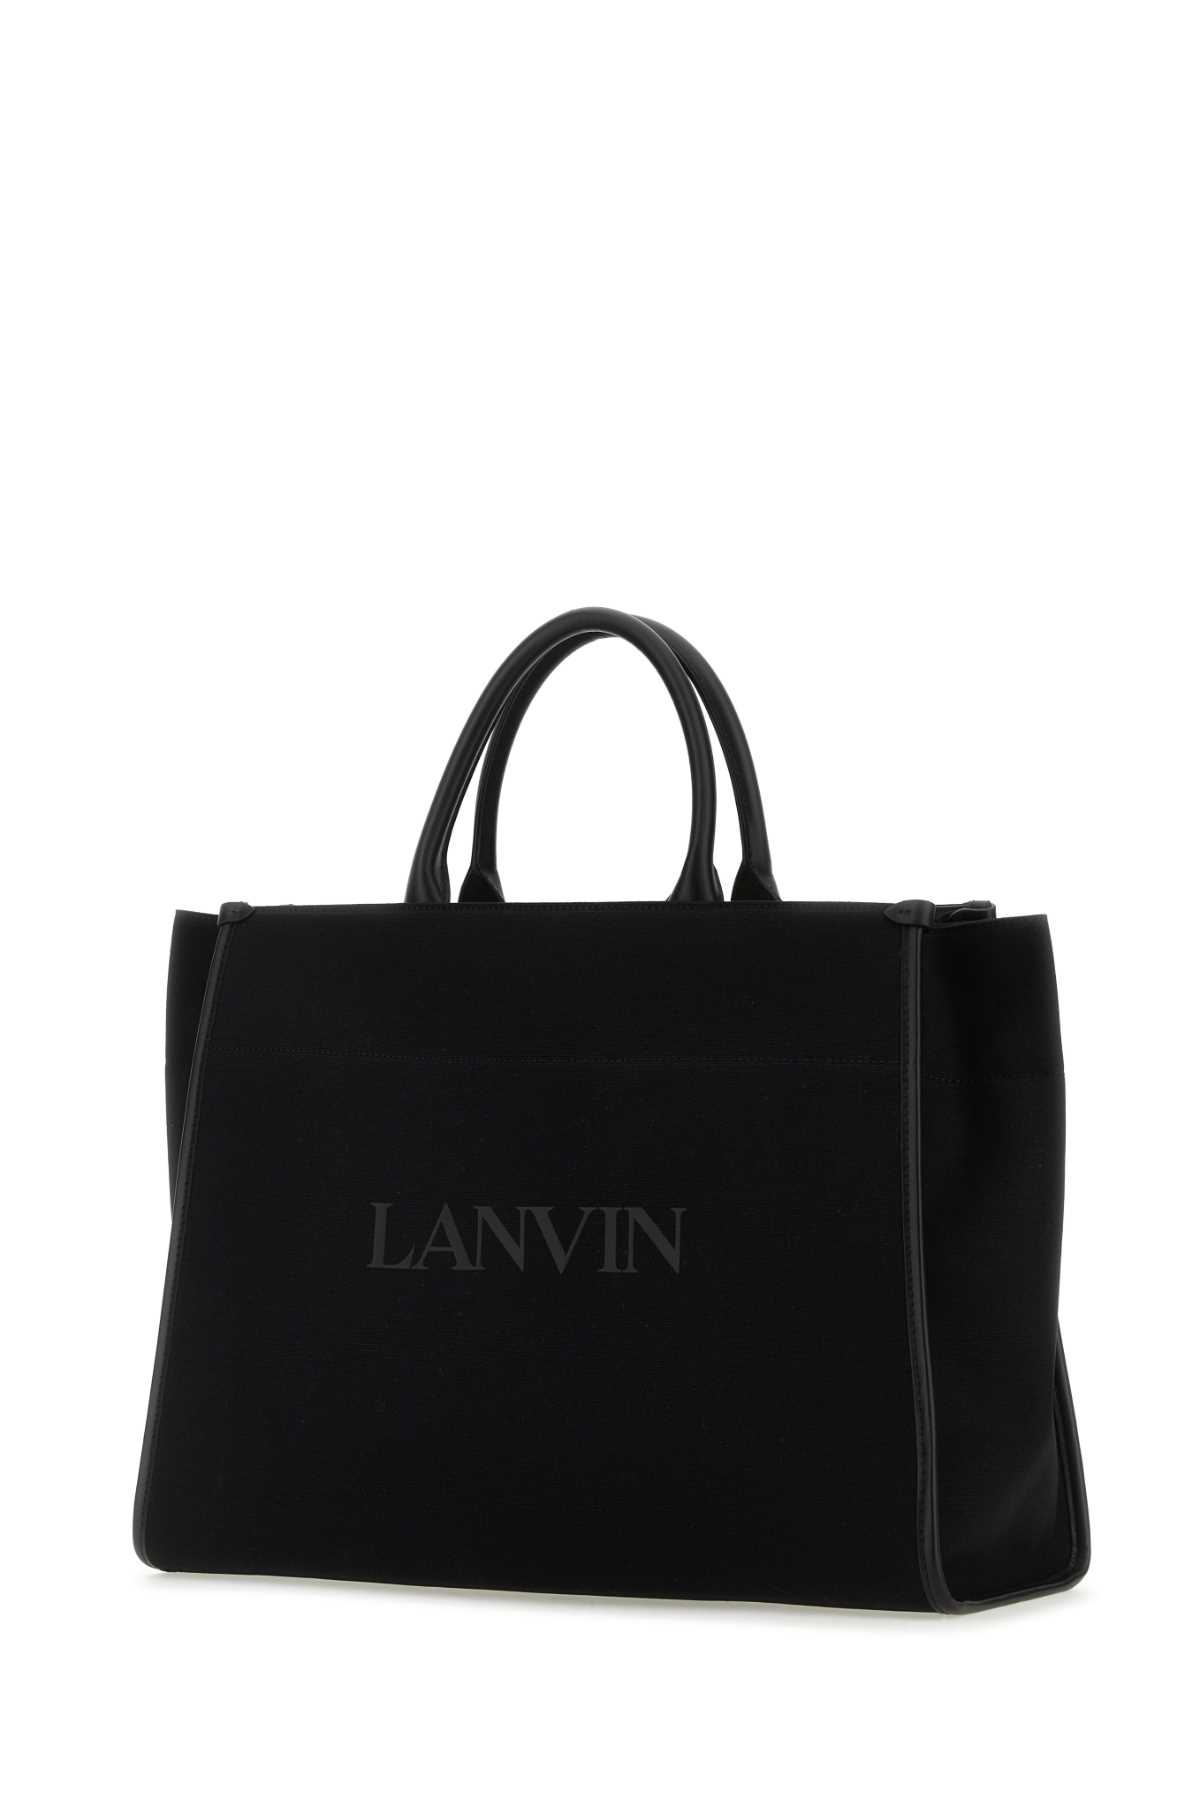 LANVIN BLACK CANVAS MM SHOPPING BAG